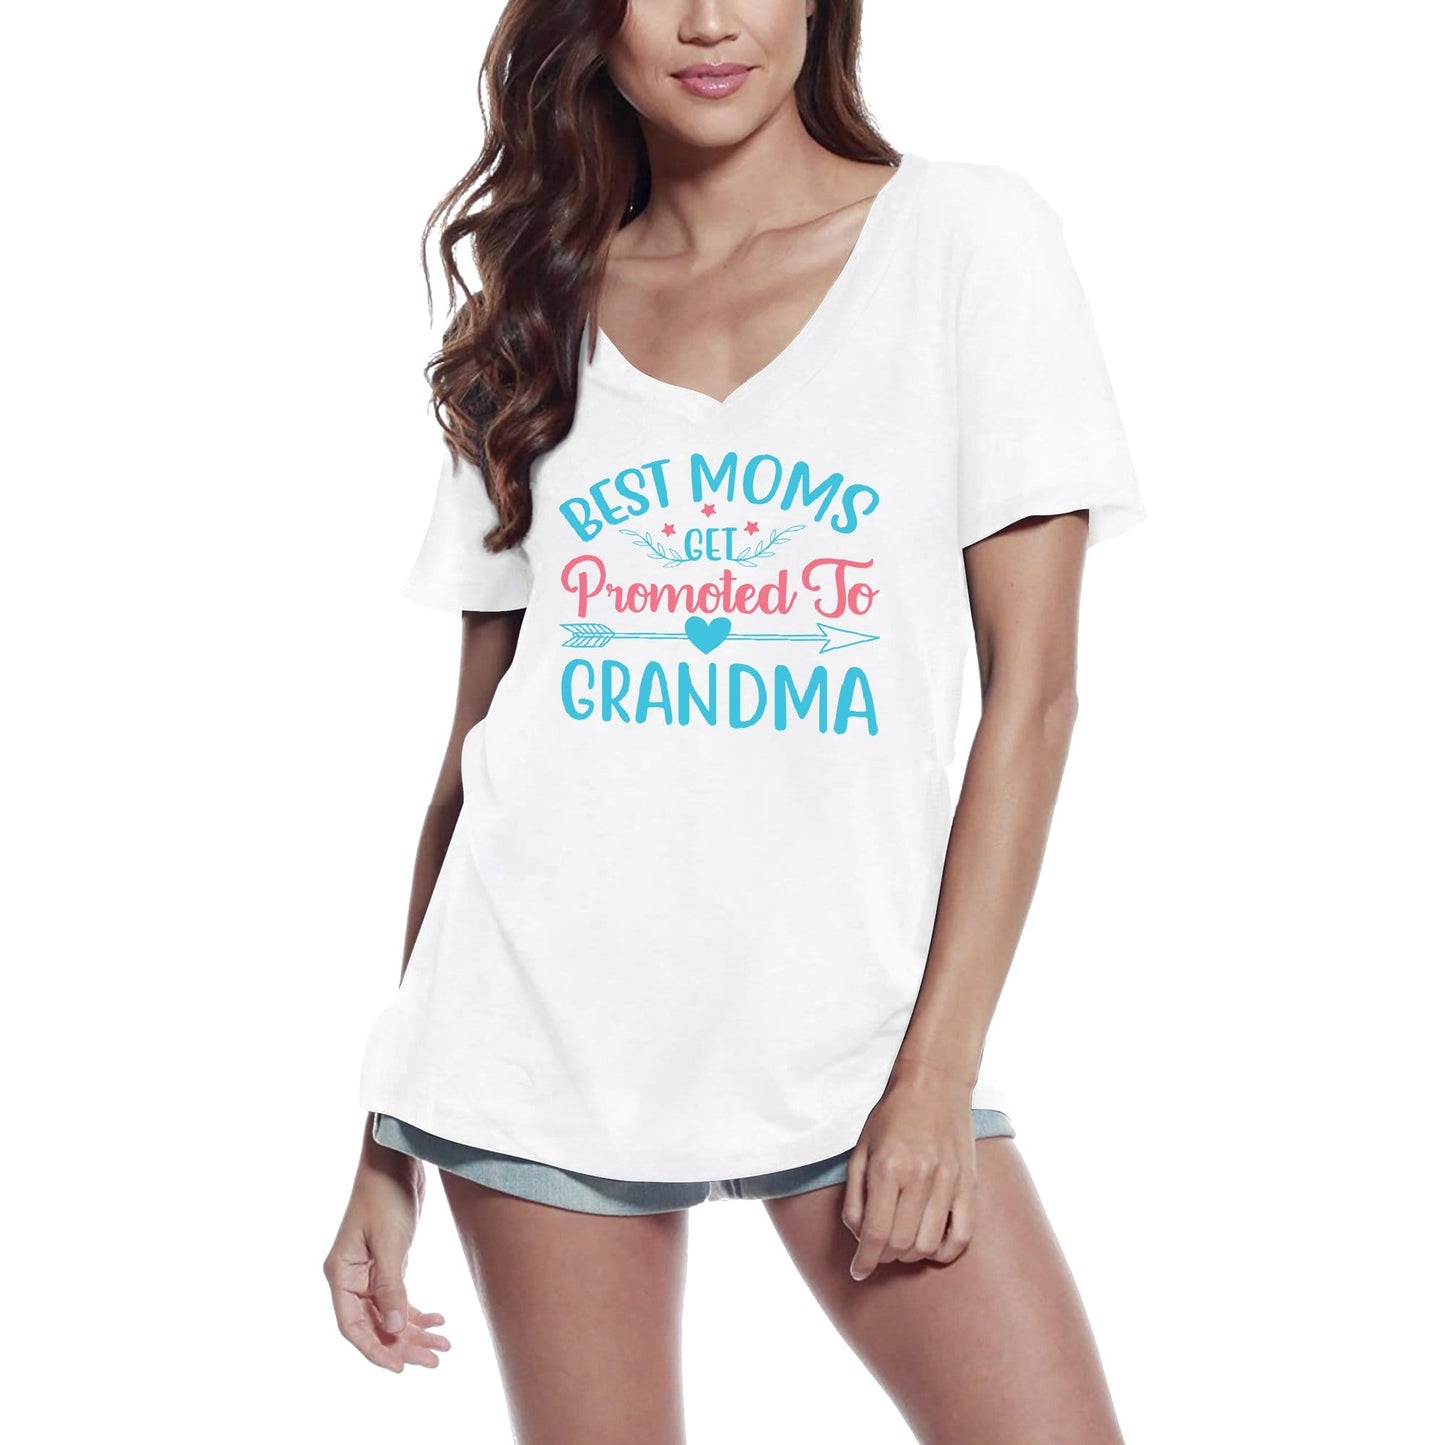 ULTRABASIC Women's T-Shirt Best Moms Get Promoted to Grandma - Short Sleeve Tee Shirt Tops